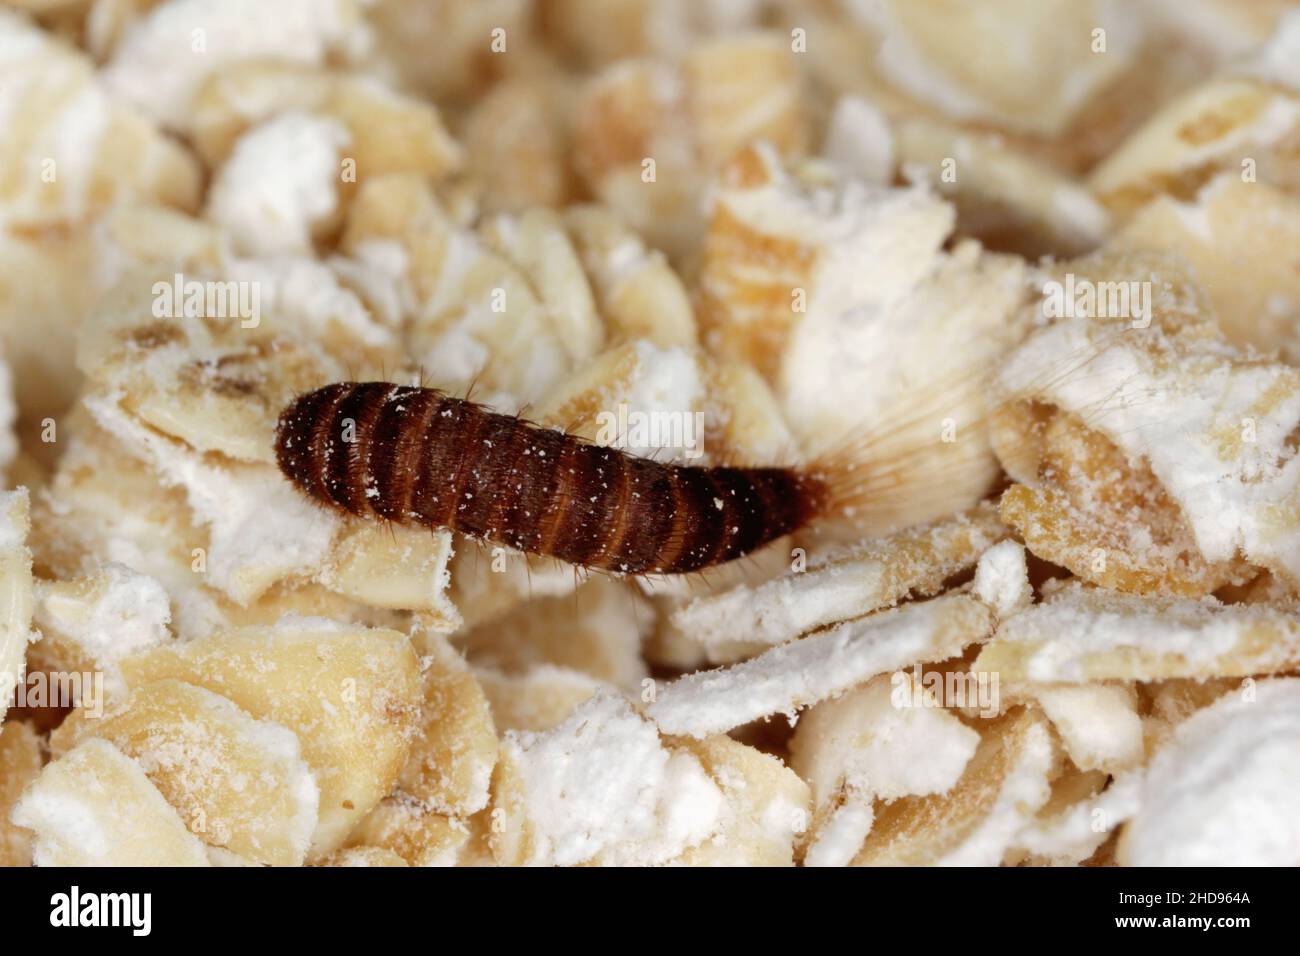 Larva of Attagenus pellio the fur beetle or carpet beetle from the family Dermestidae a skin beetles. On oat flakes. Stock Photo